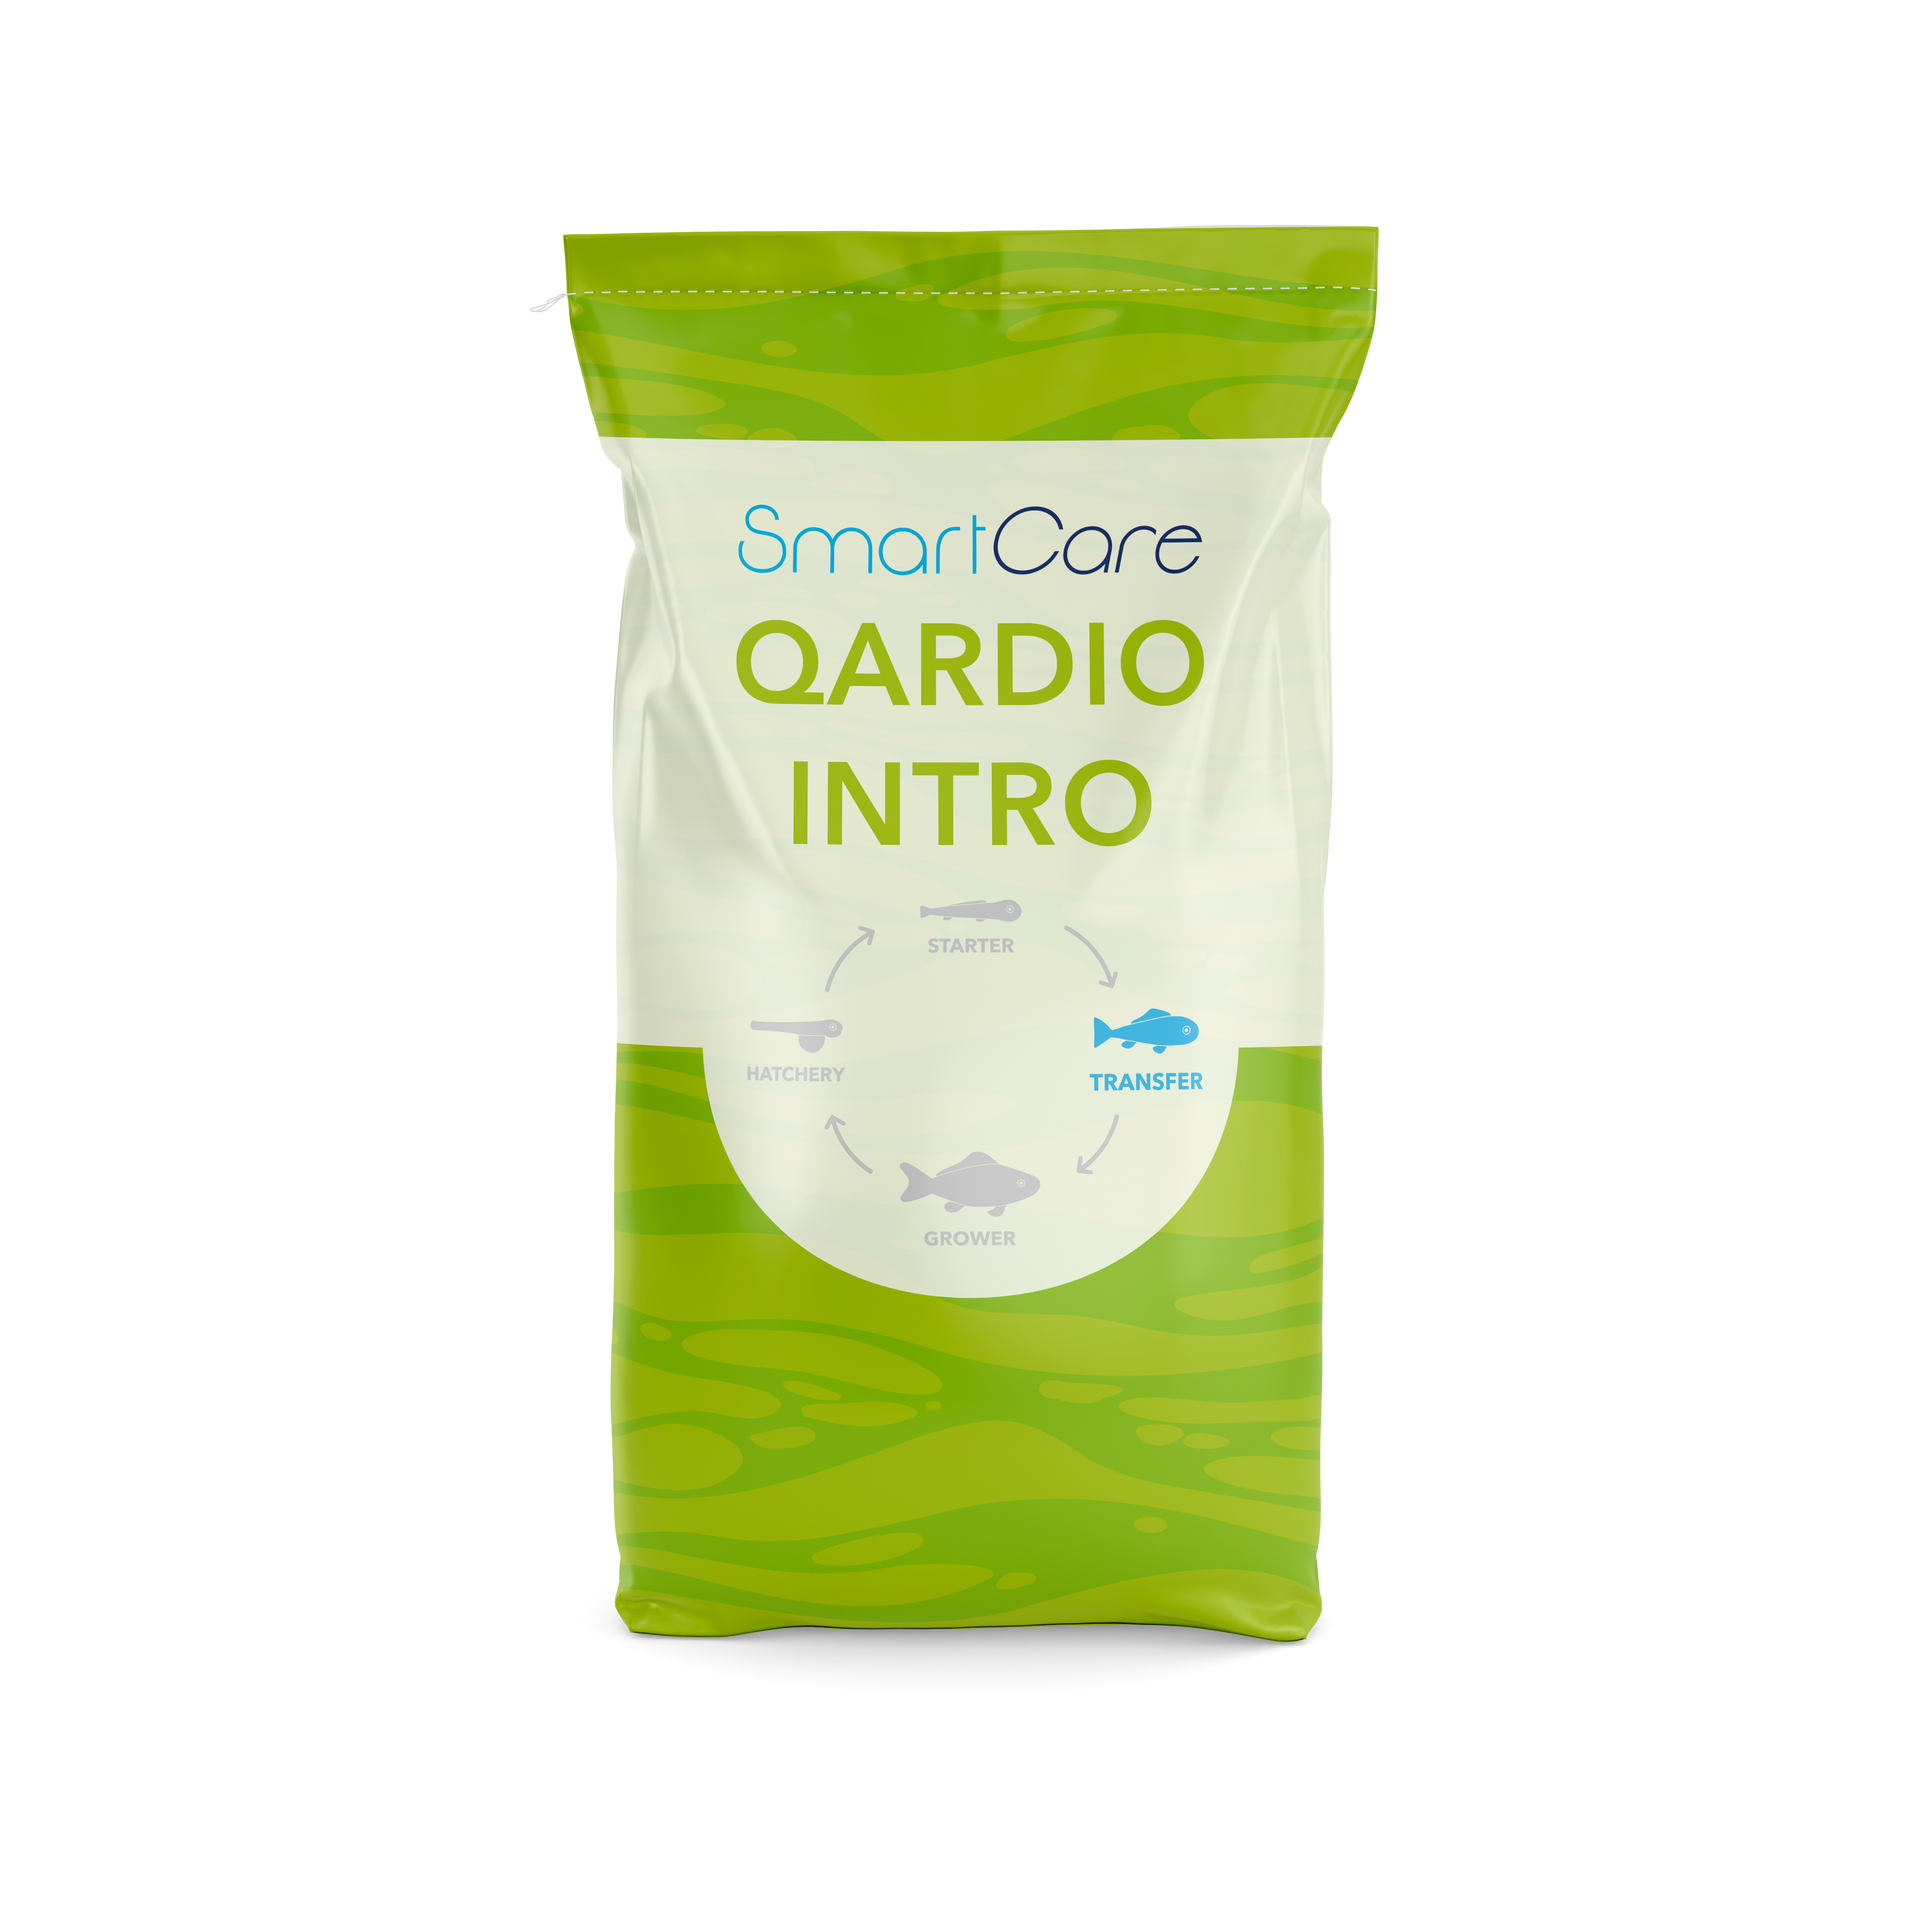 SmartCare Qardio health feed